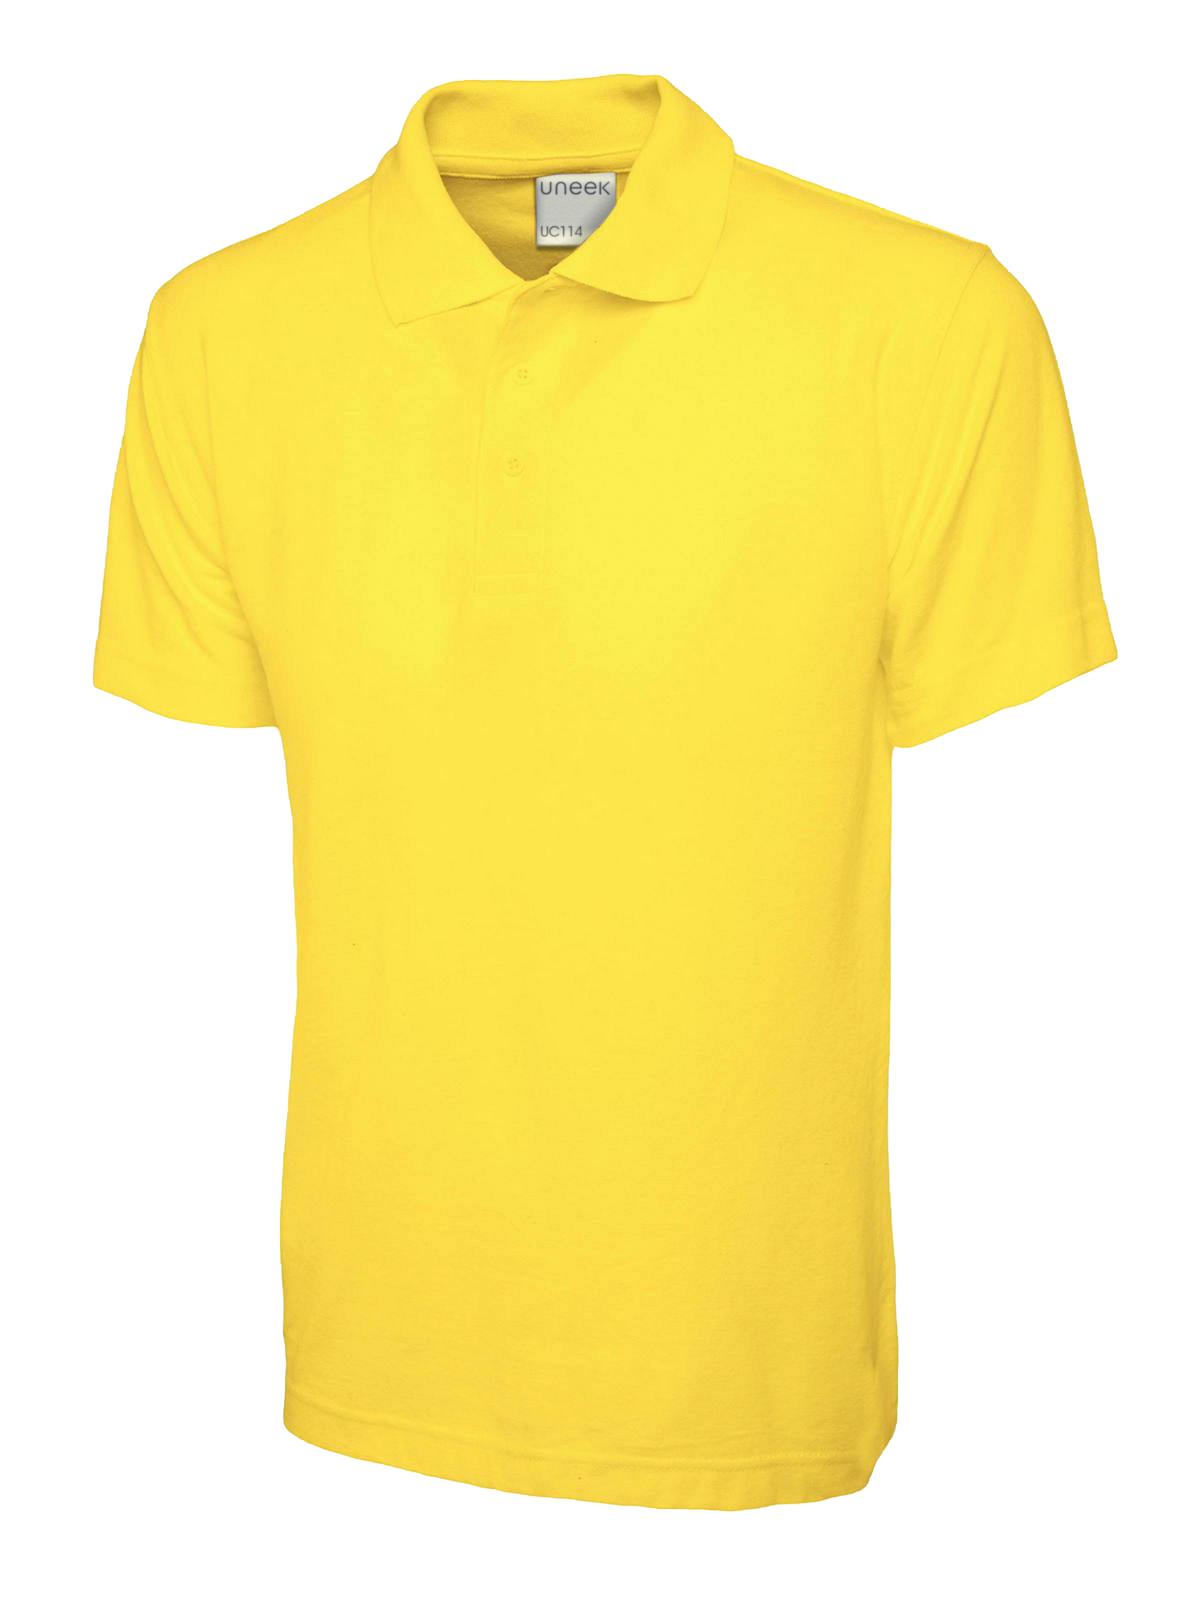 Uneek Men's Ultra Cotton Poloshirt - Yellow